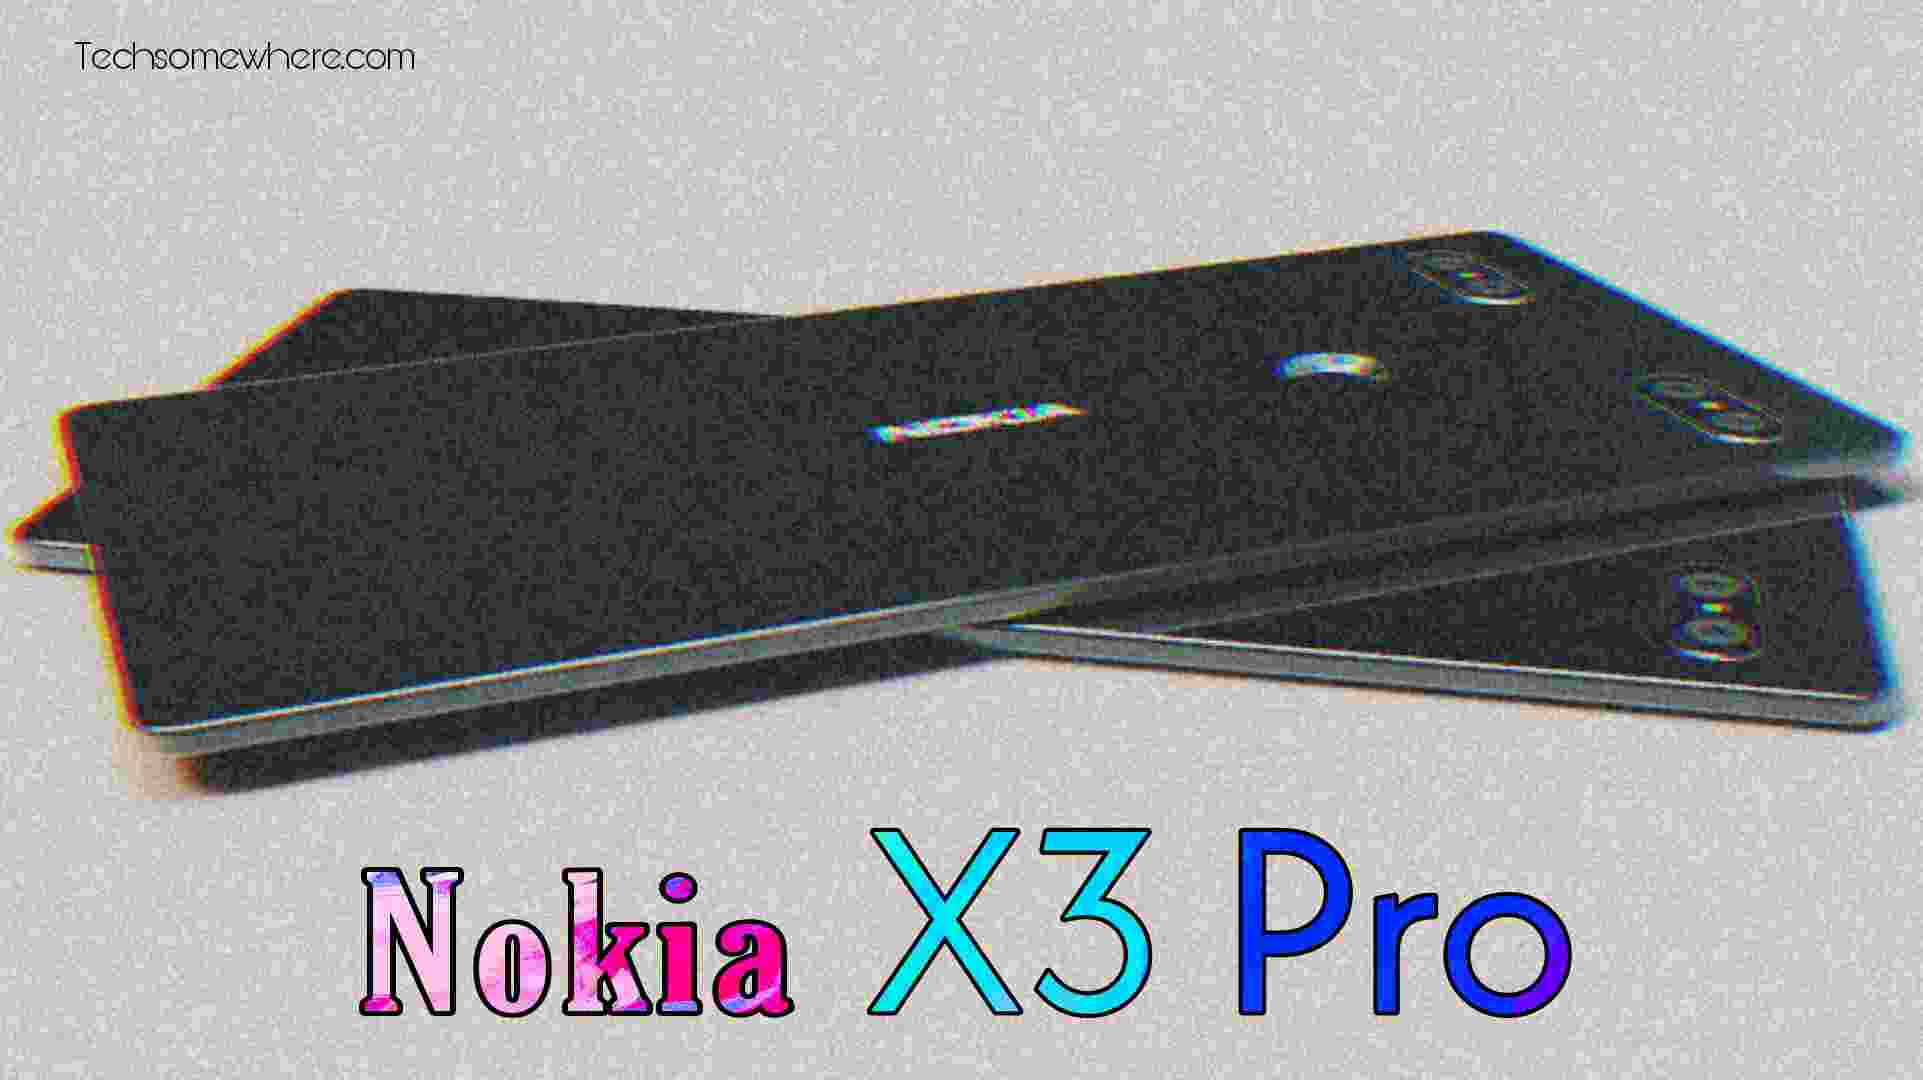 Nokia Z3 Pro - Price, Full Specs, Rumours & Release Date.